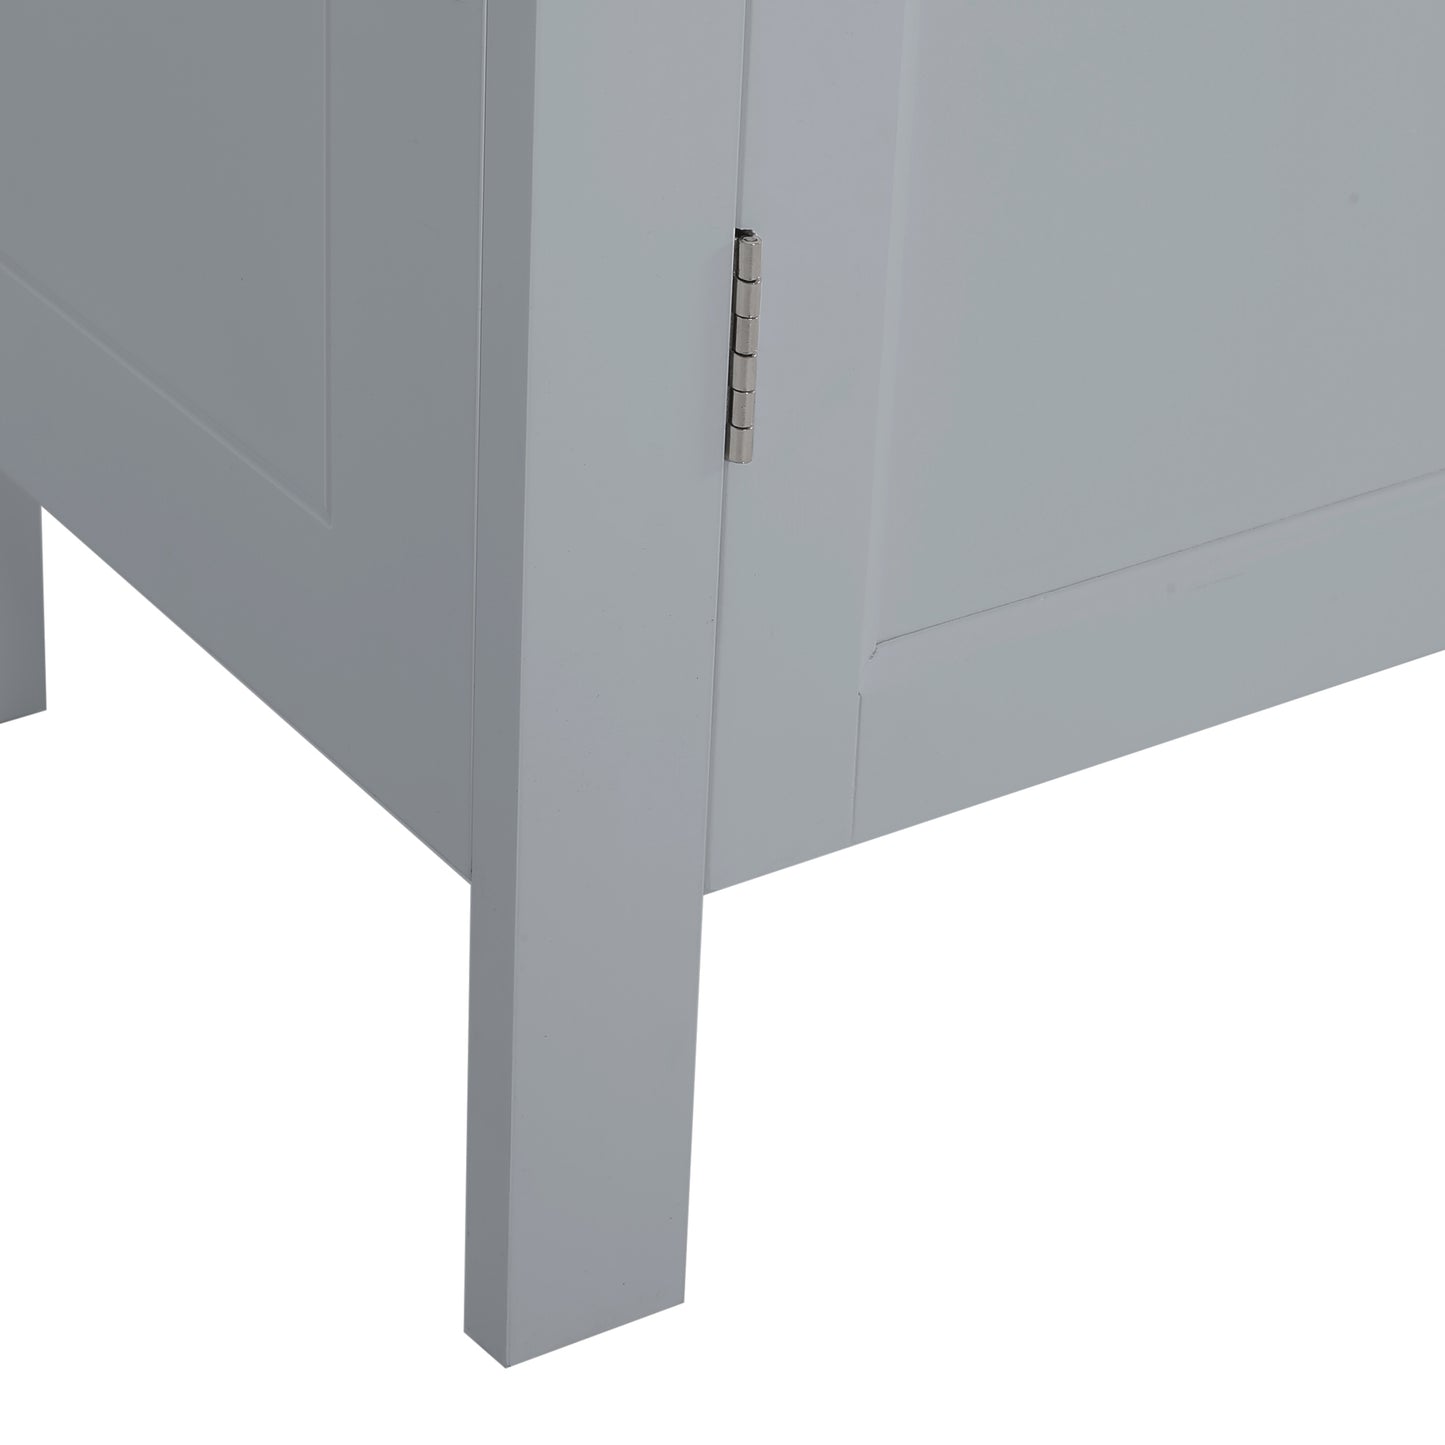 Meader Modern Bathroom 2 Door Floor Storage Cabinet with Drawer